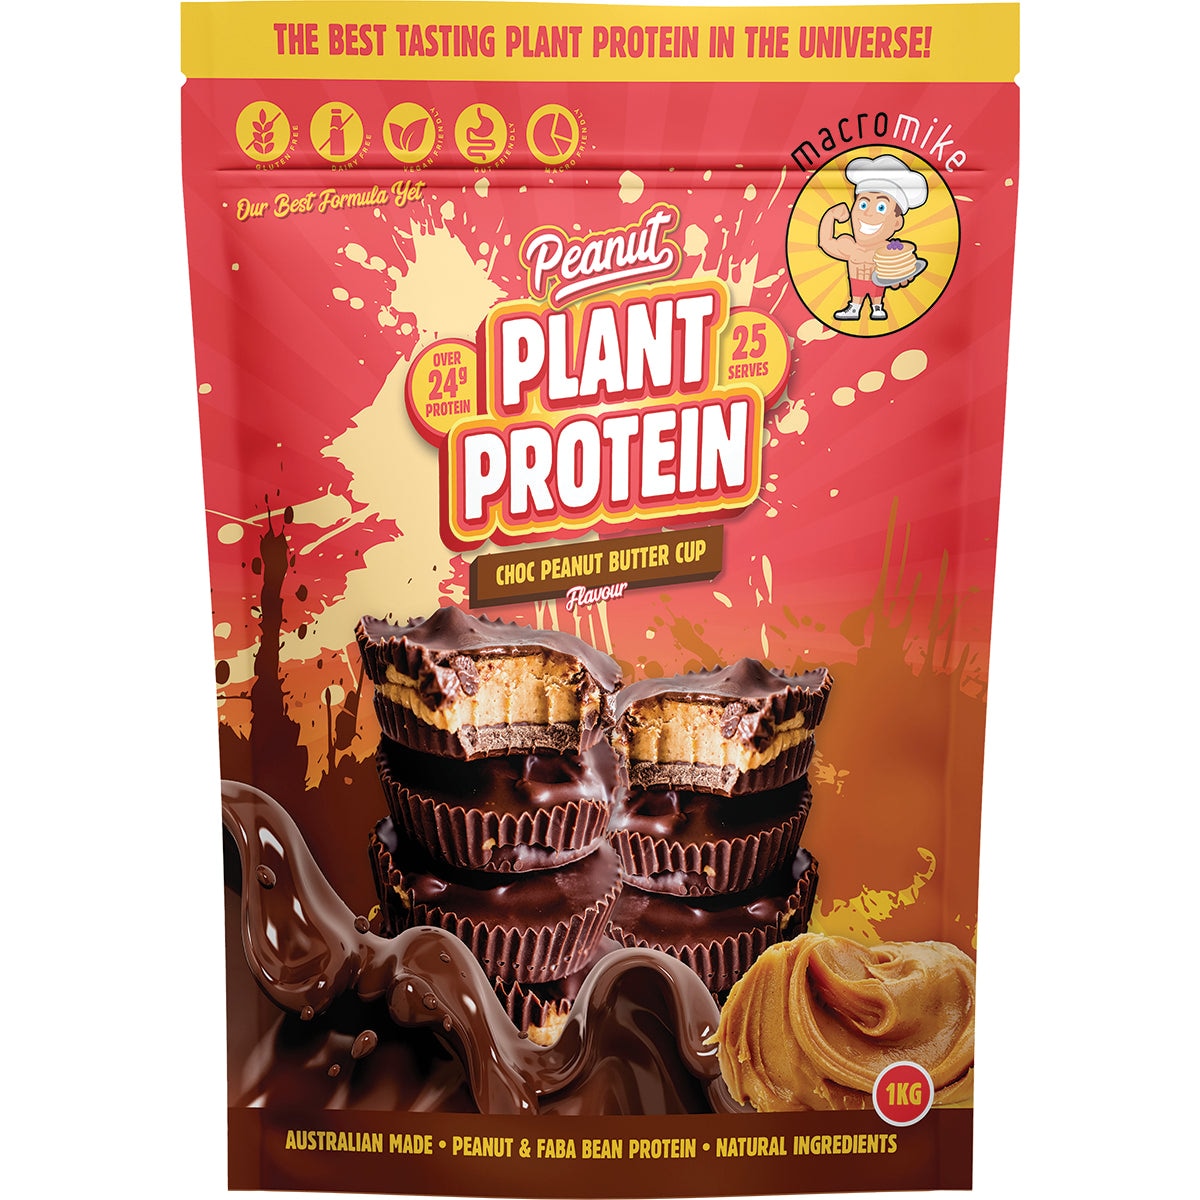 Macro Mike Peanut Plant Protein Choc Butter Cup 1kg Australia